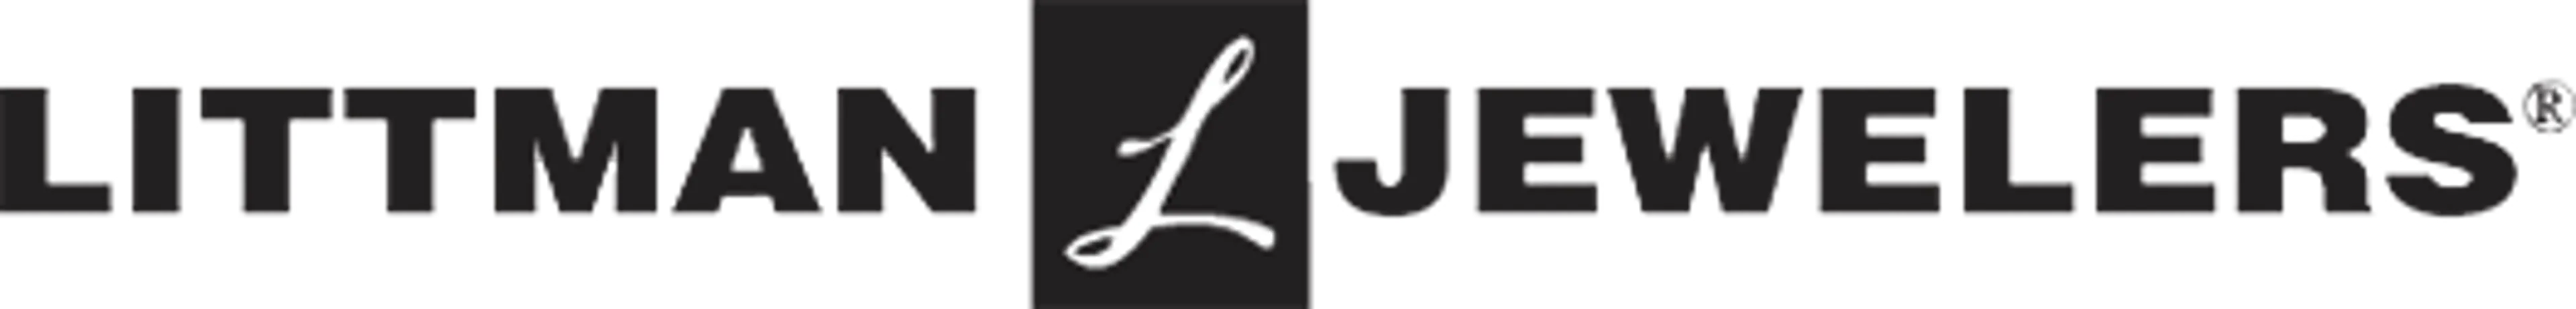 LITTMAN JEWELERS logo